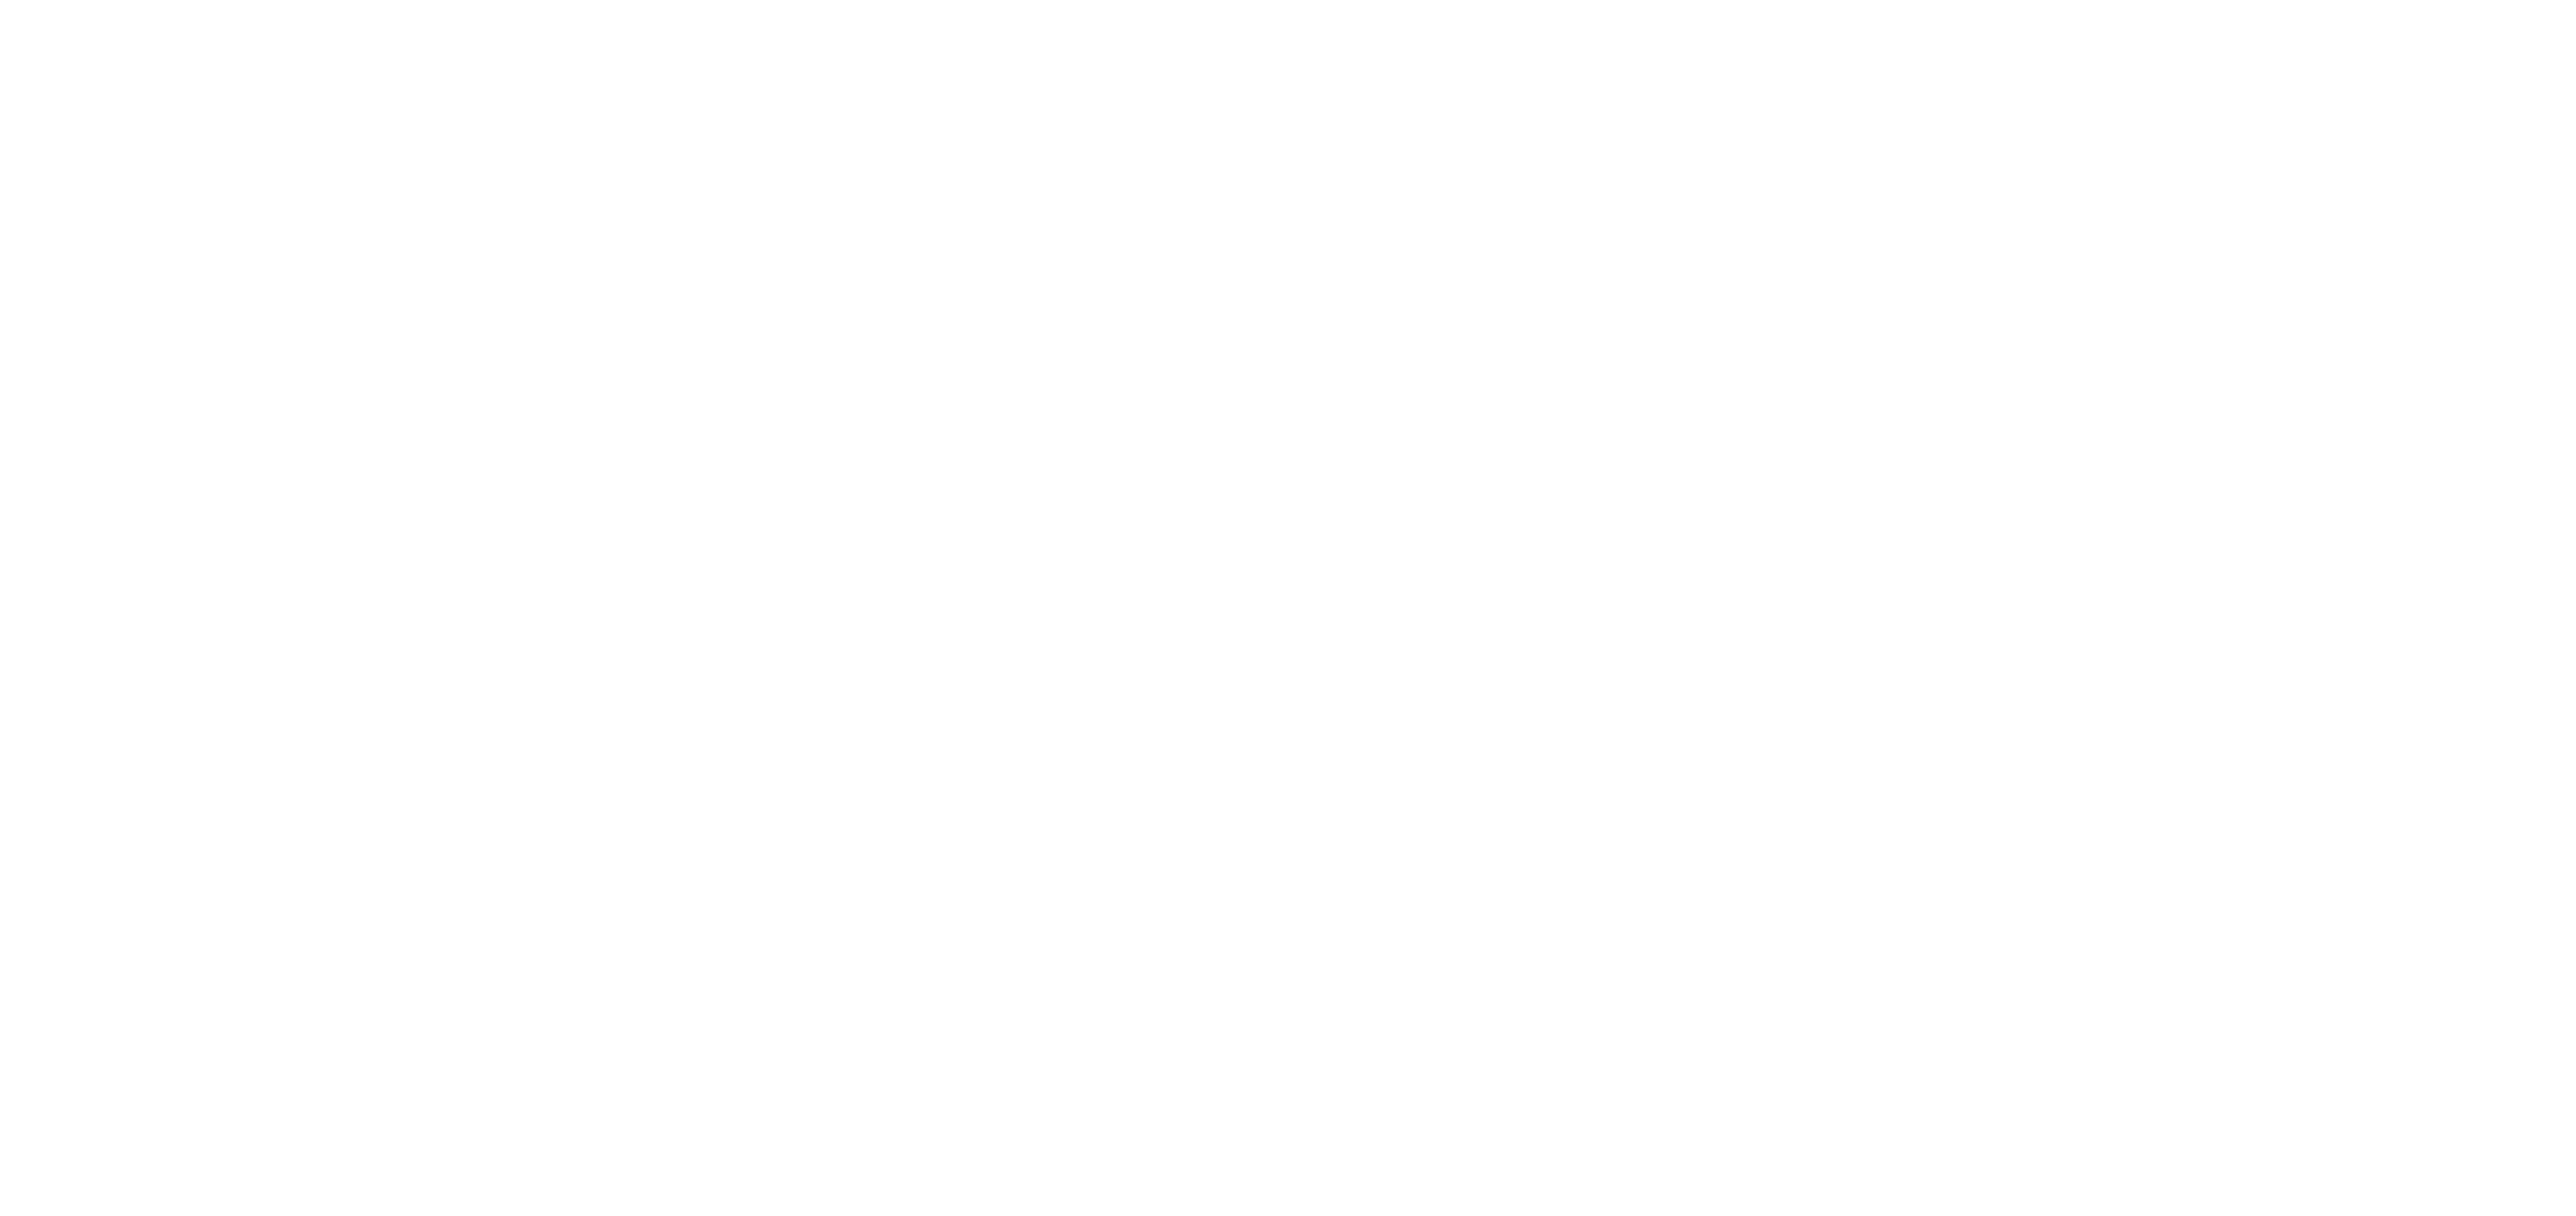 Diamond Dental MK